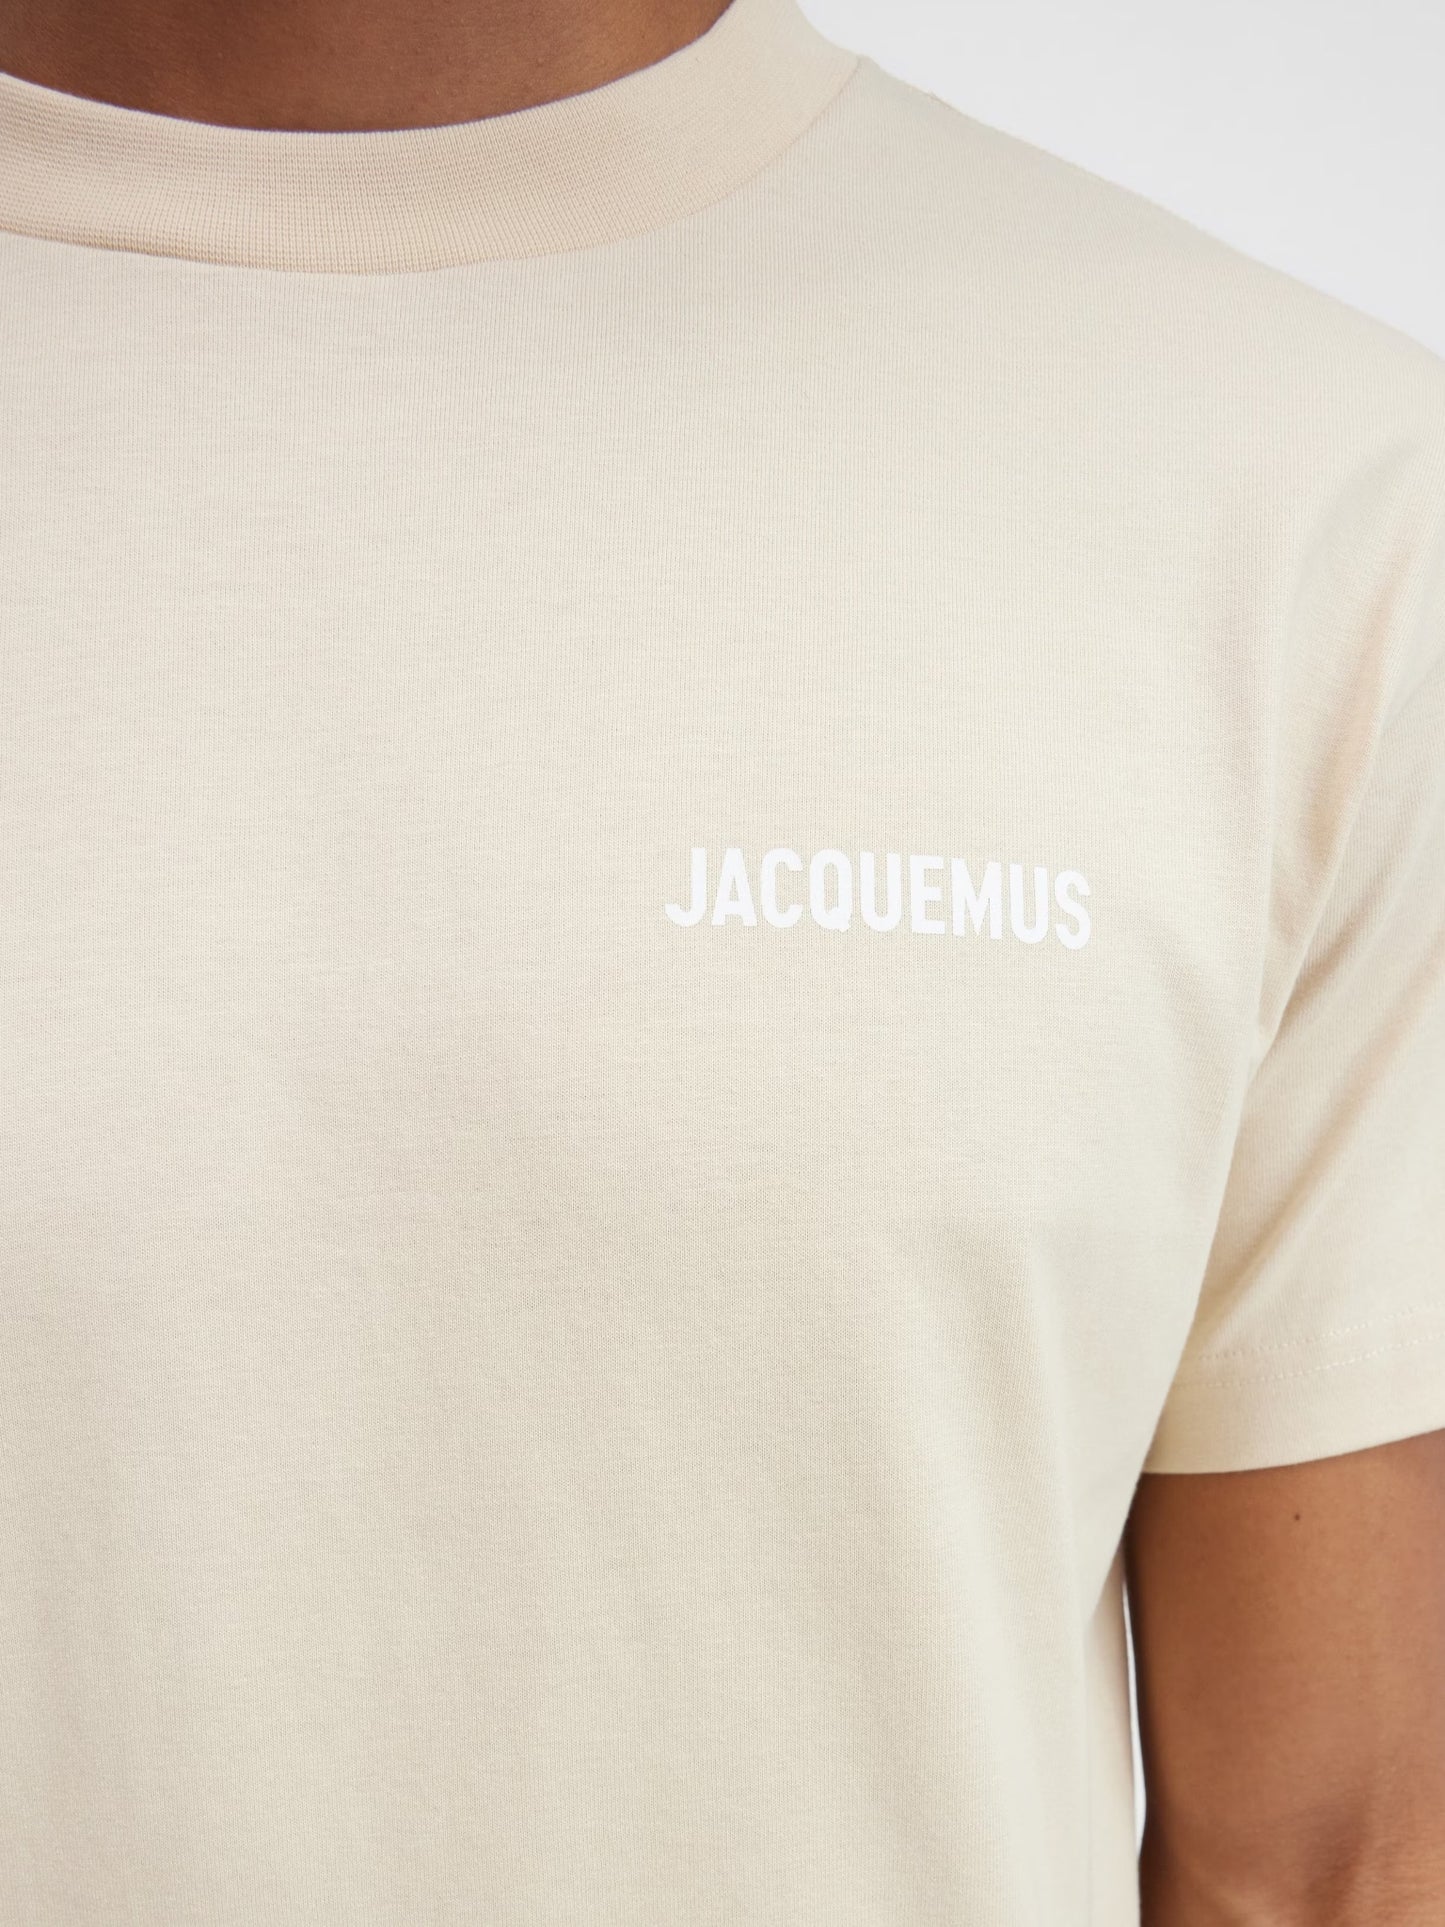 Jacquemus Le T-Shirt Light Beige BlankRoom